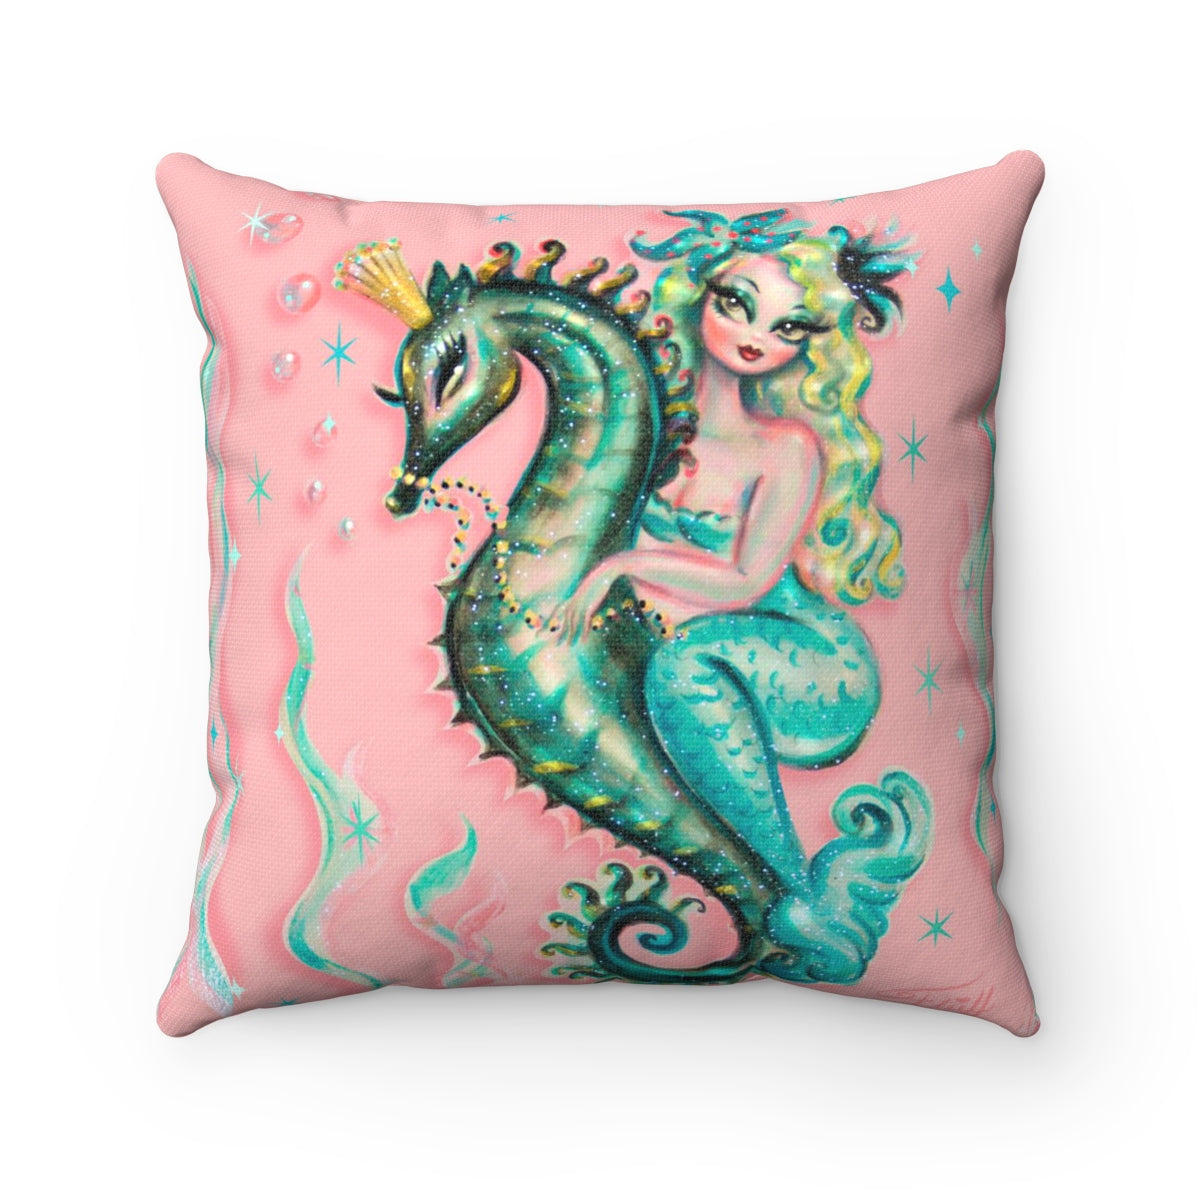 Blue Mermaid Riding a Seahorse Prince • Square Pillow